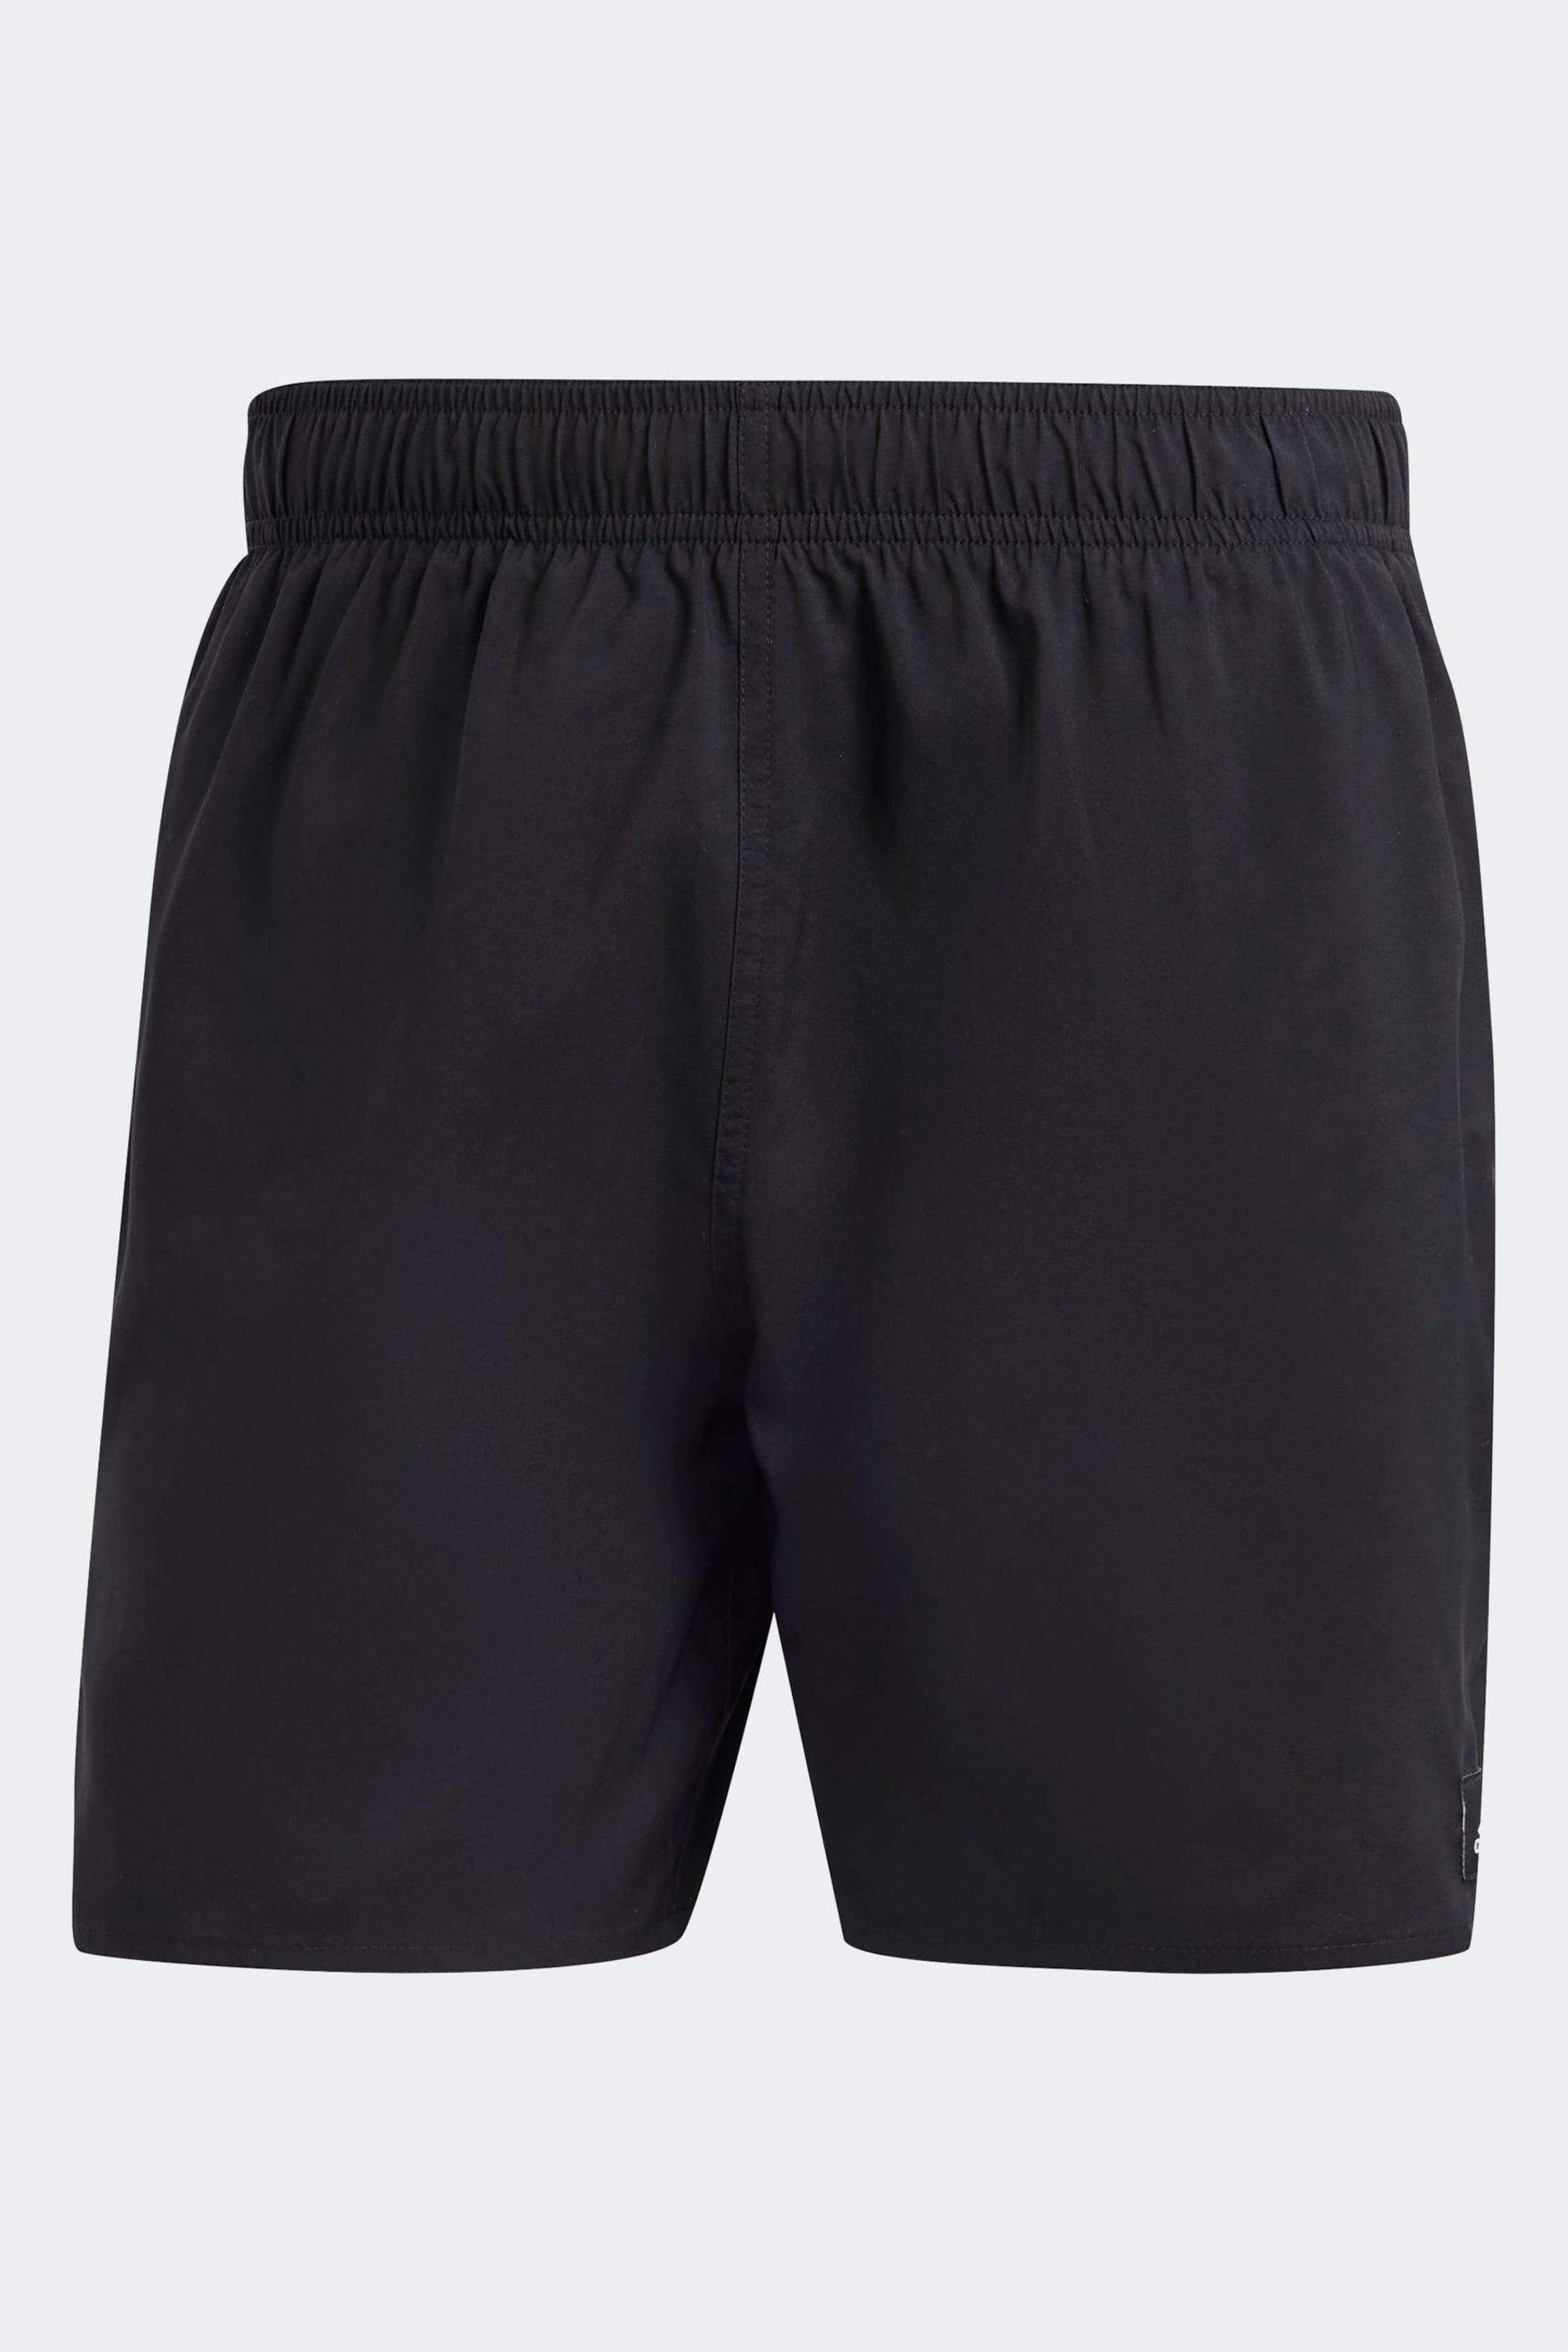 adidas Dark Black Solid CLX Short Length Swim Shorts - Image 9 of 9